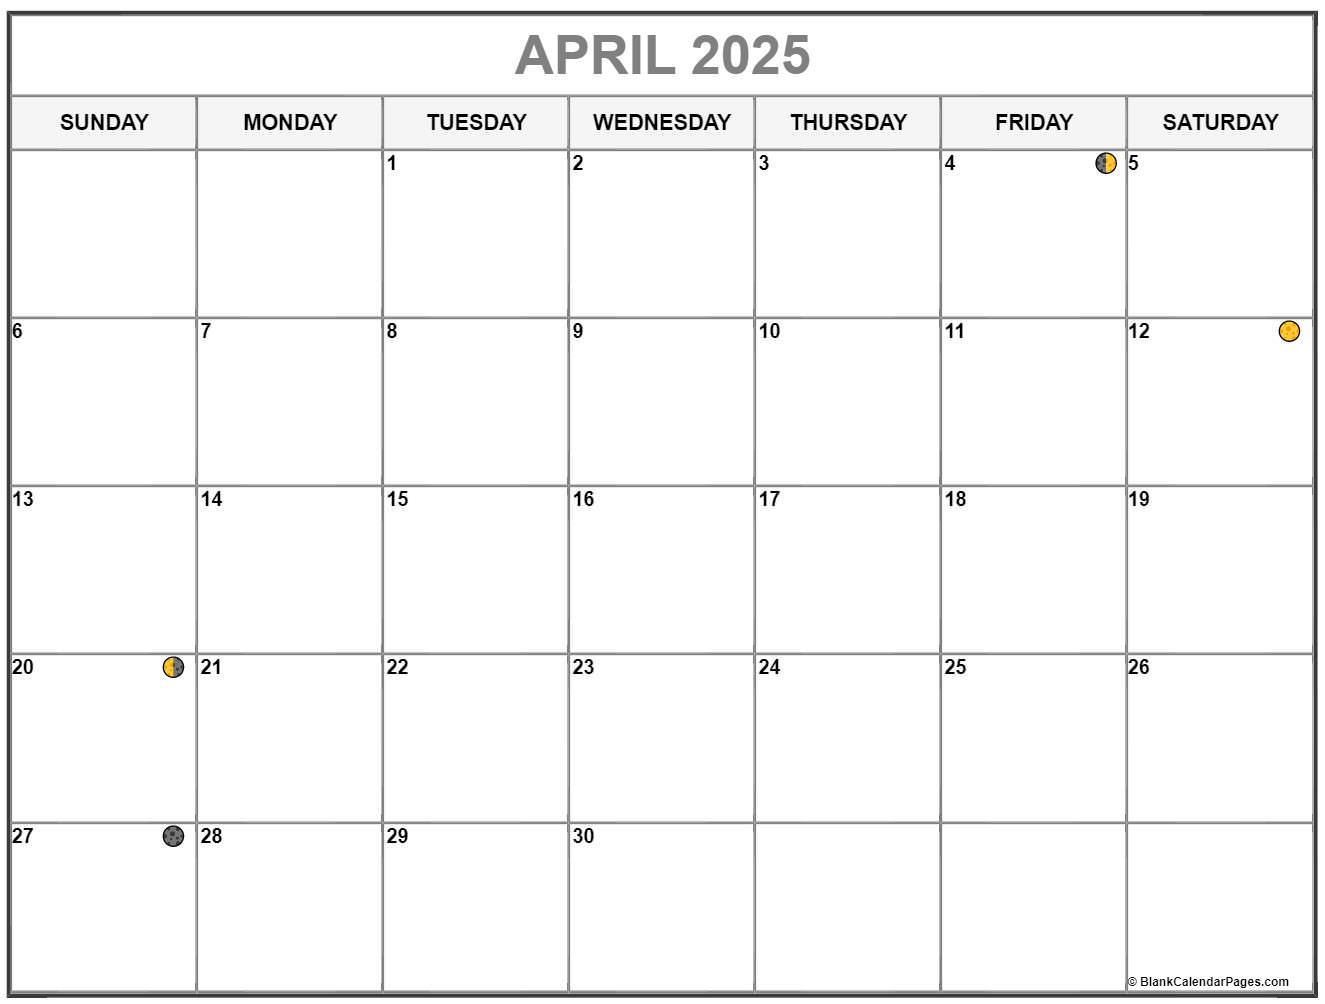 april-2025-lunar-calendar-moon-phase-calendar